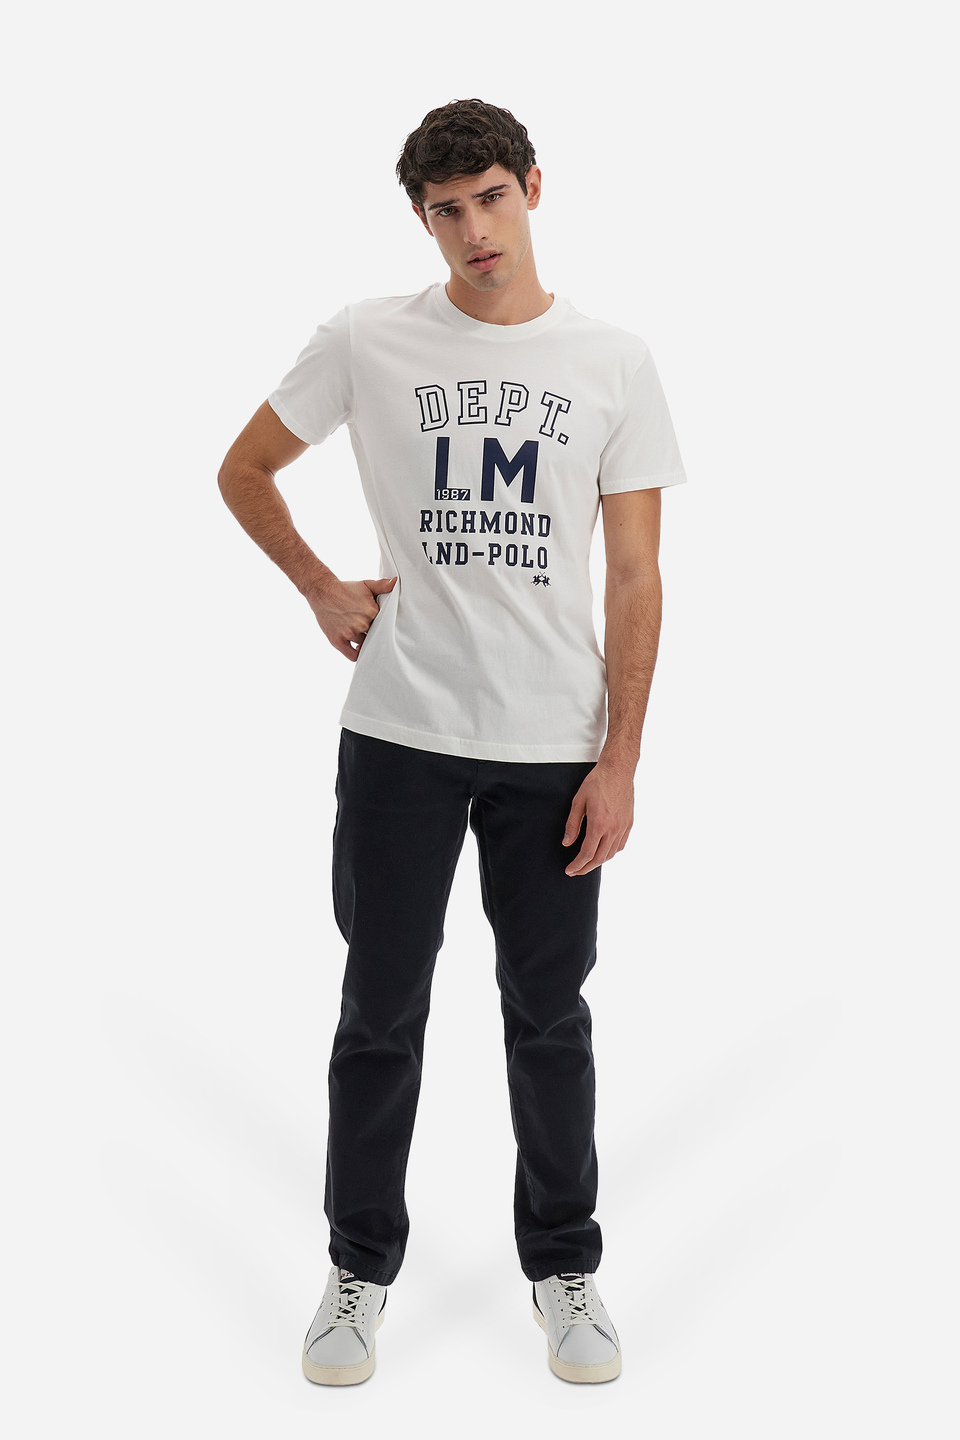 Polo Academy Kurzarm-Herren-T-Shirt einfarbig mit Maxi-Schriftzug und Mini-Logo - Venceslao | La Martina - Official Online Shop